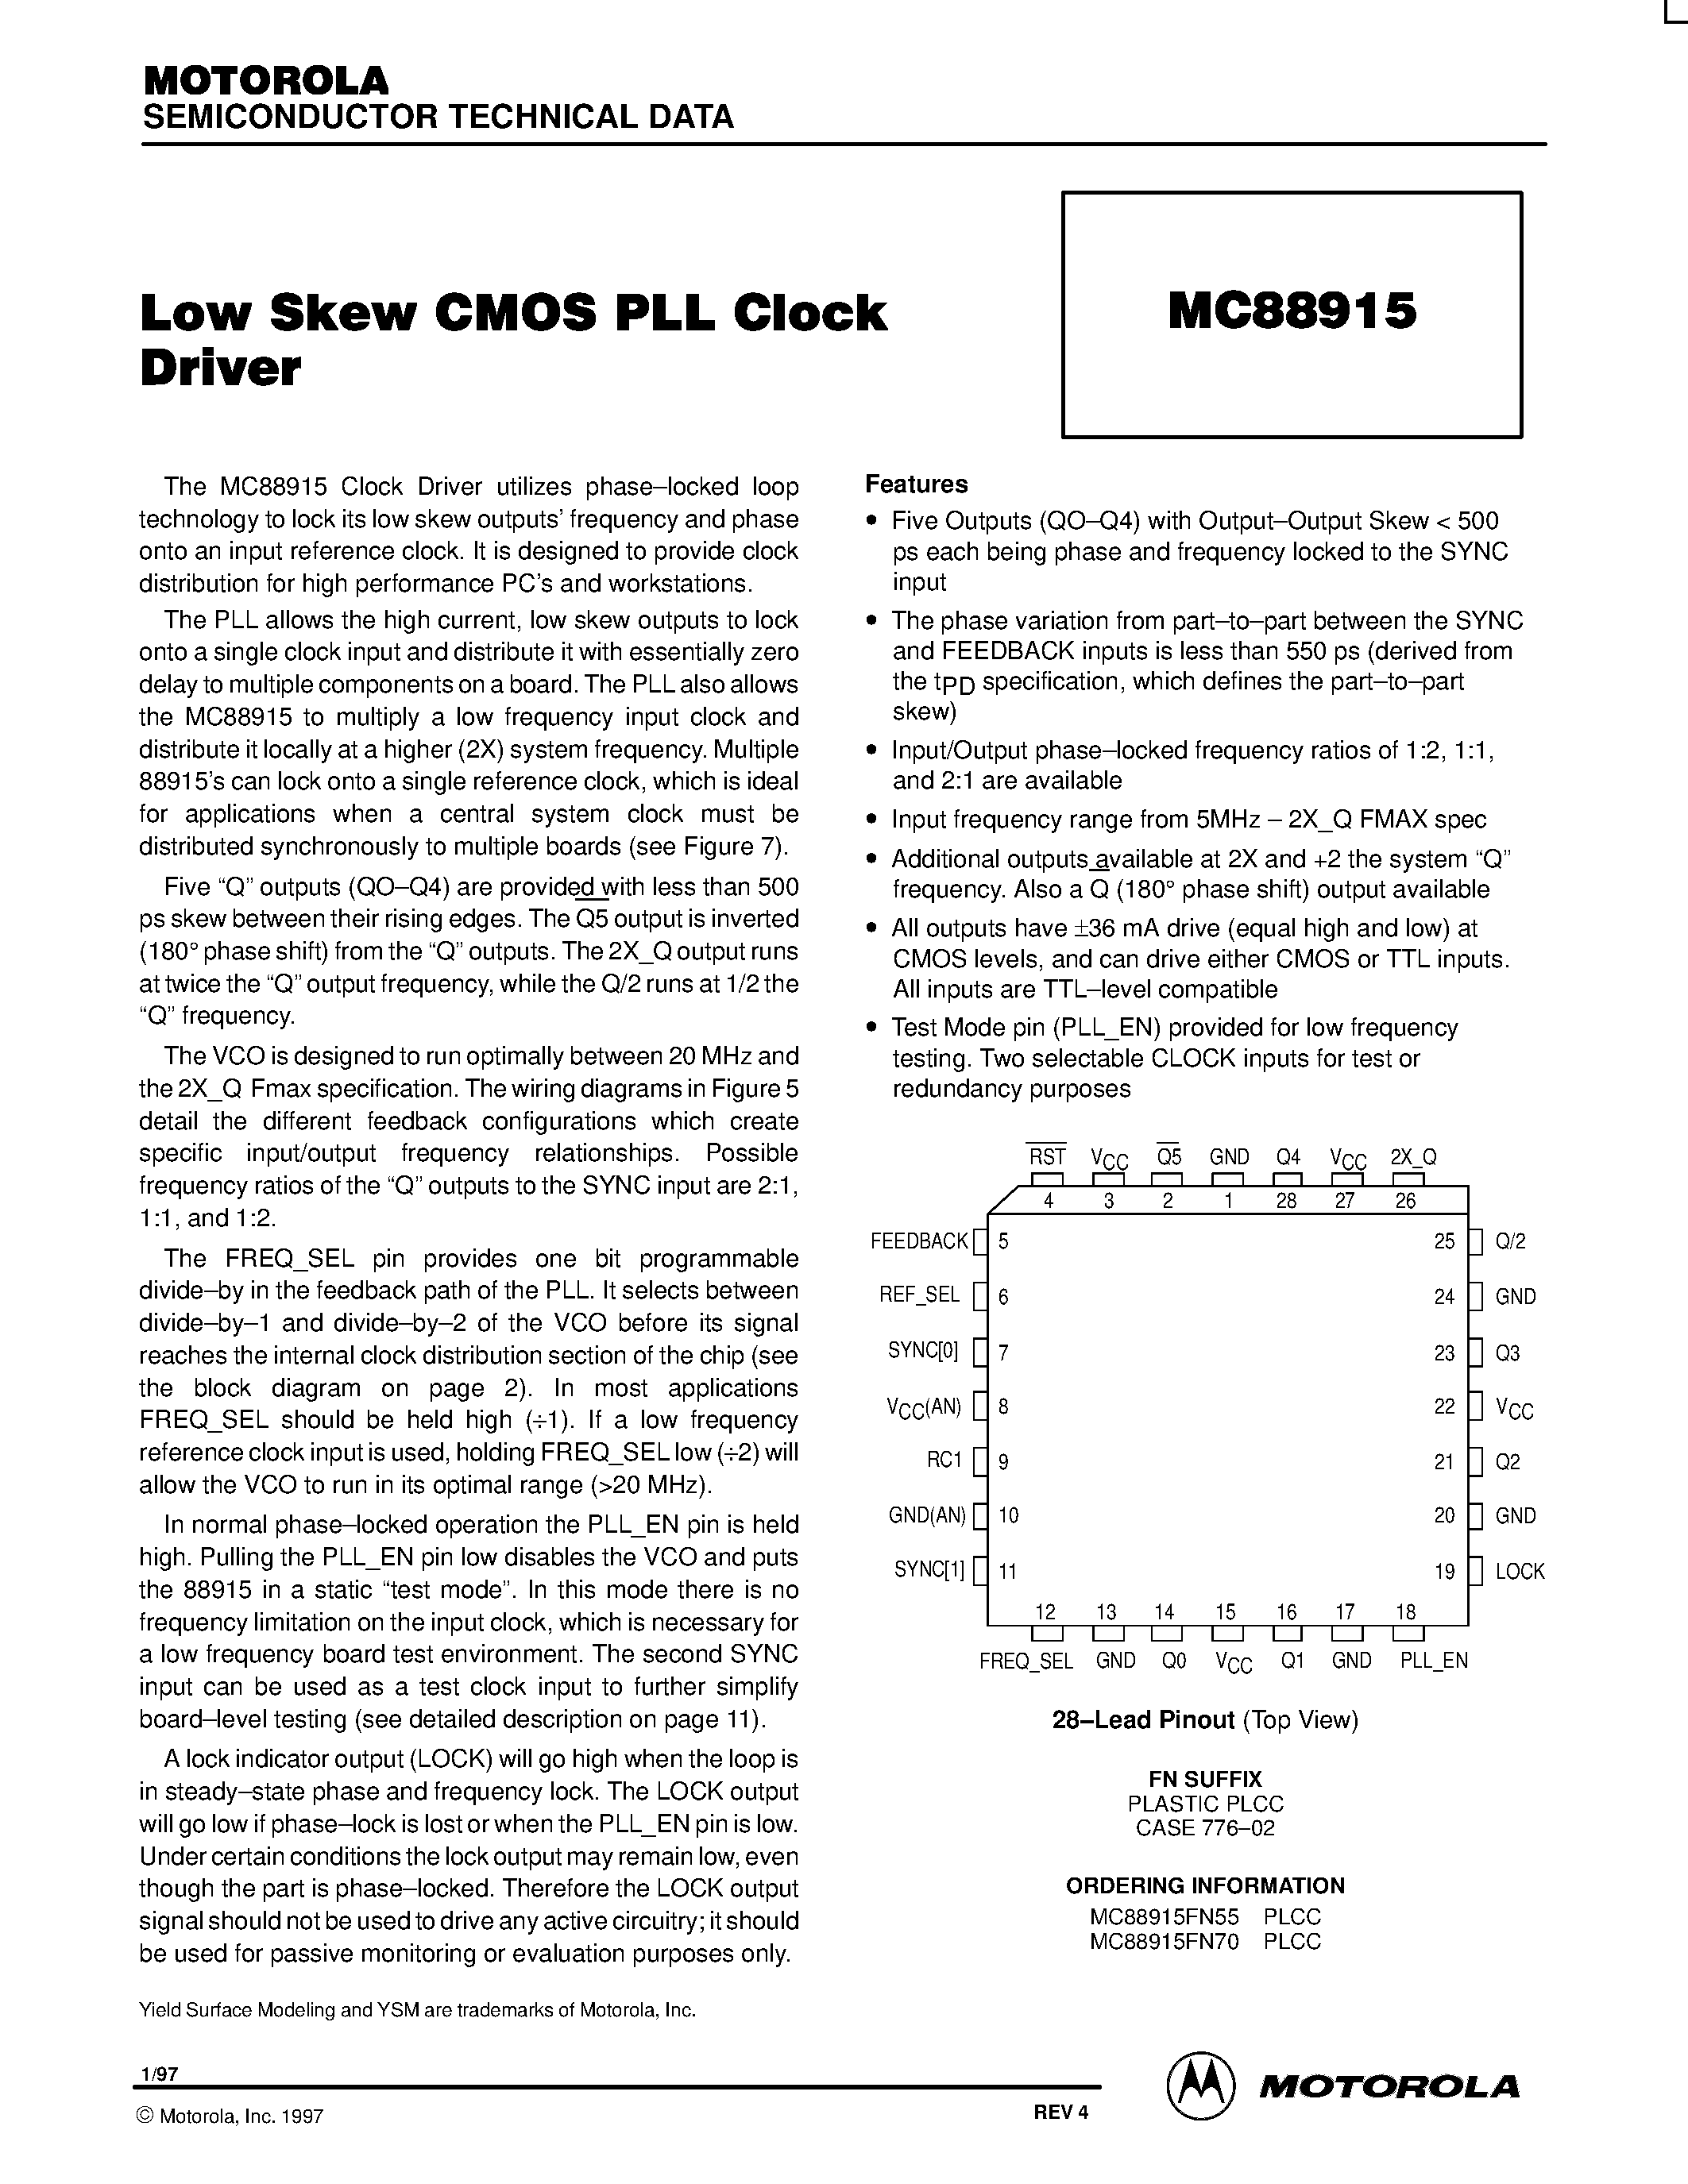 Datasheet MC88915FN55 - Low Skew CMOS PLL Clock Driver page 1